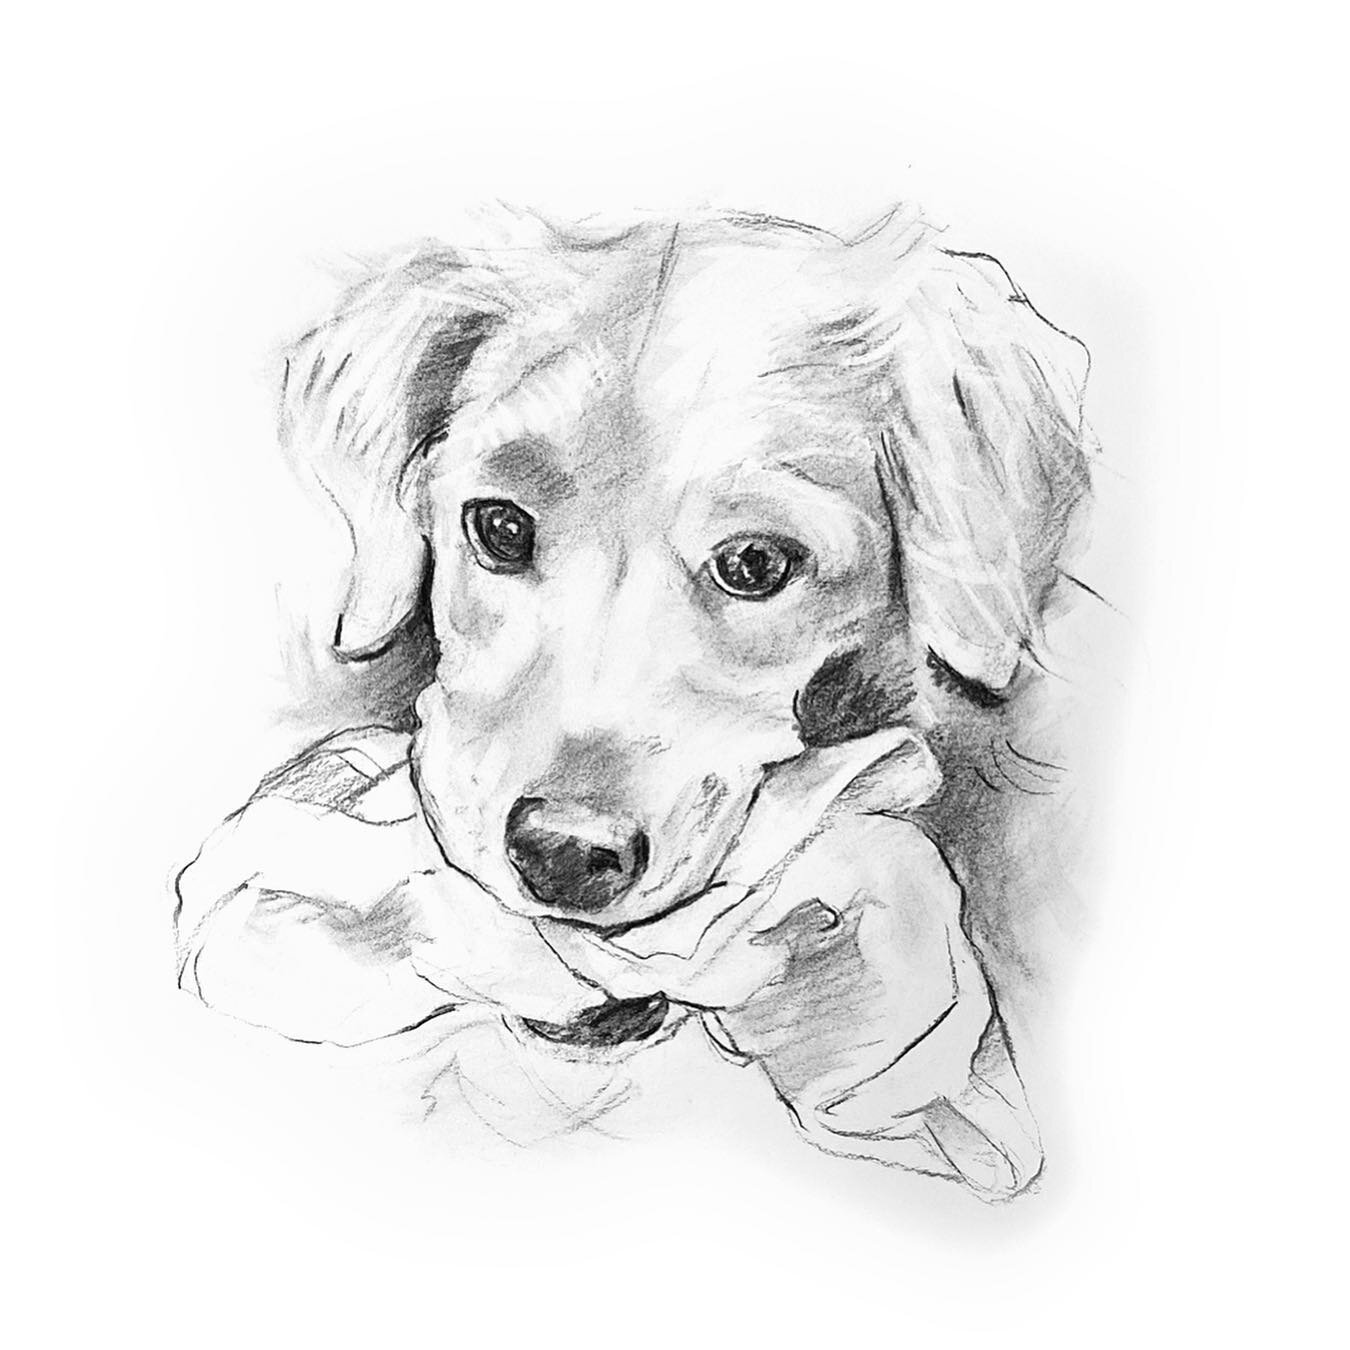 Meet Maizie 

#petportrait #drawingsketch #customart #homestyle #charcoaldrawing #dogs